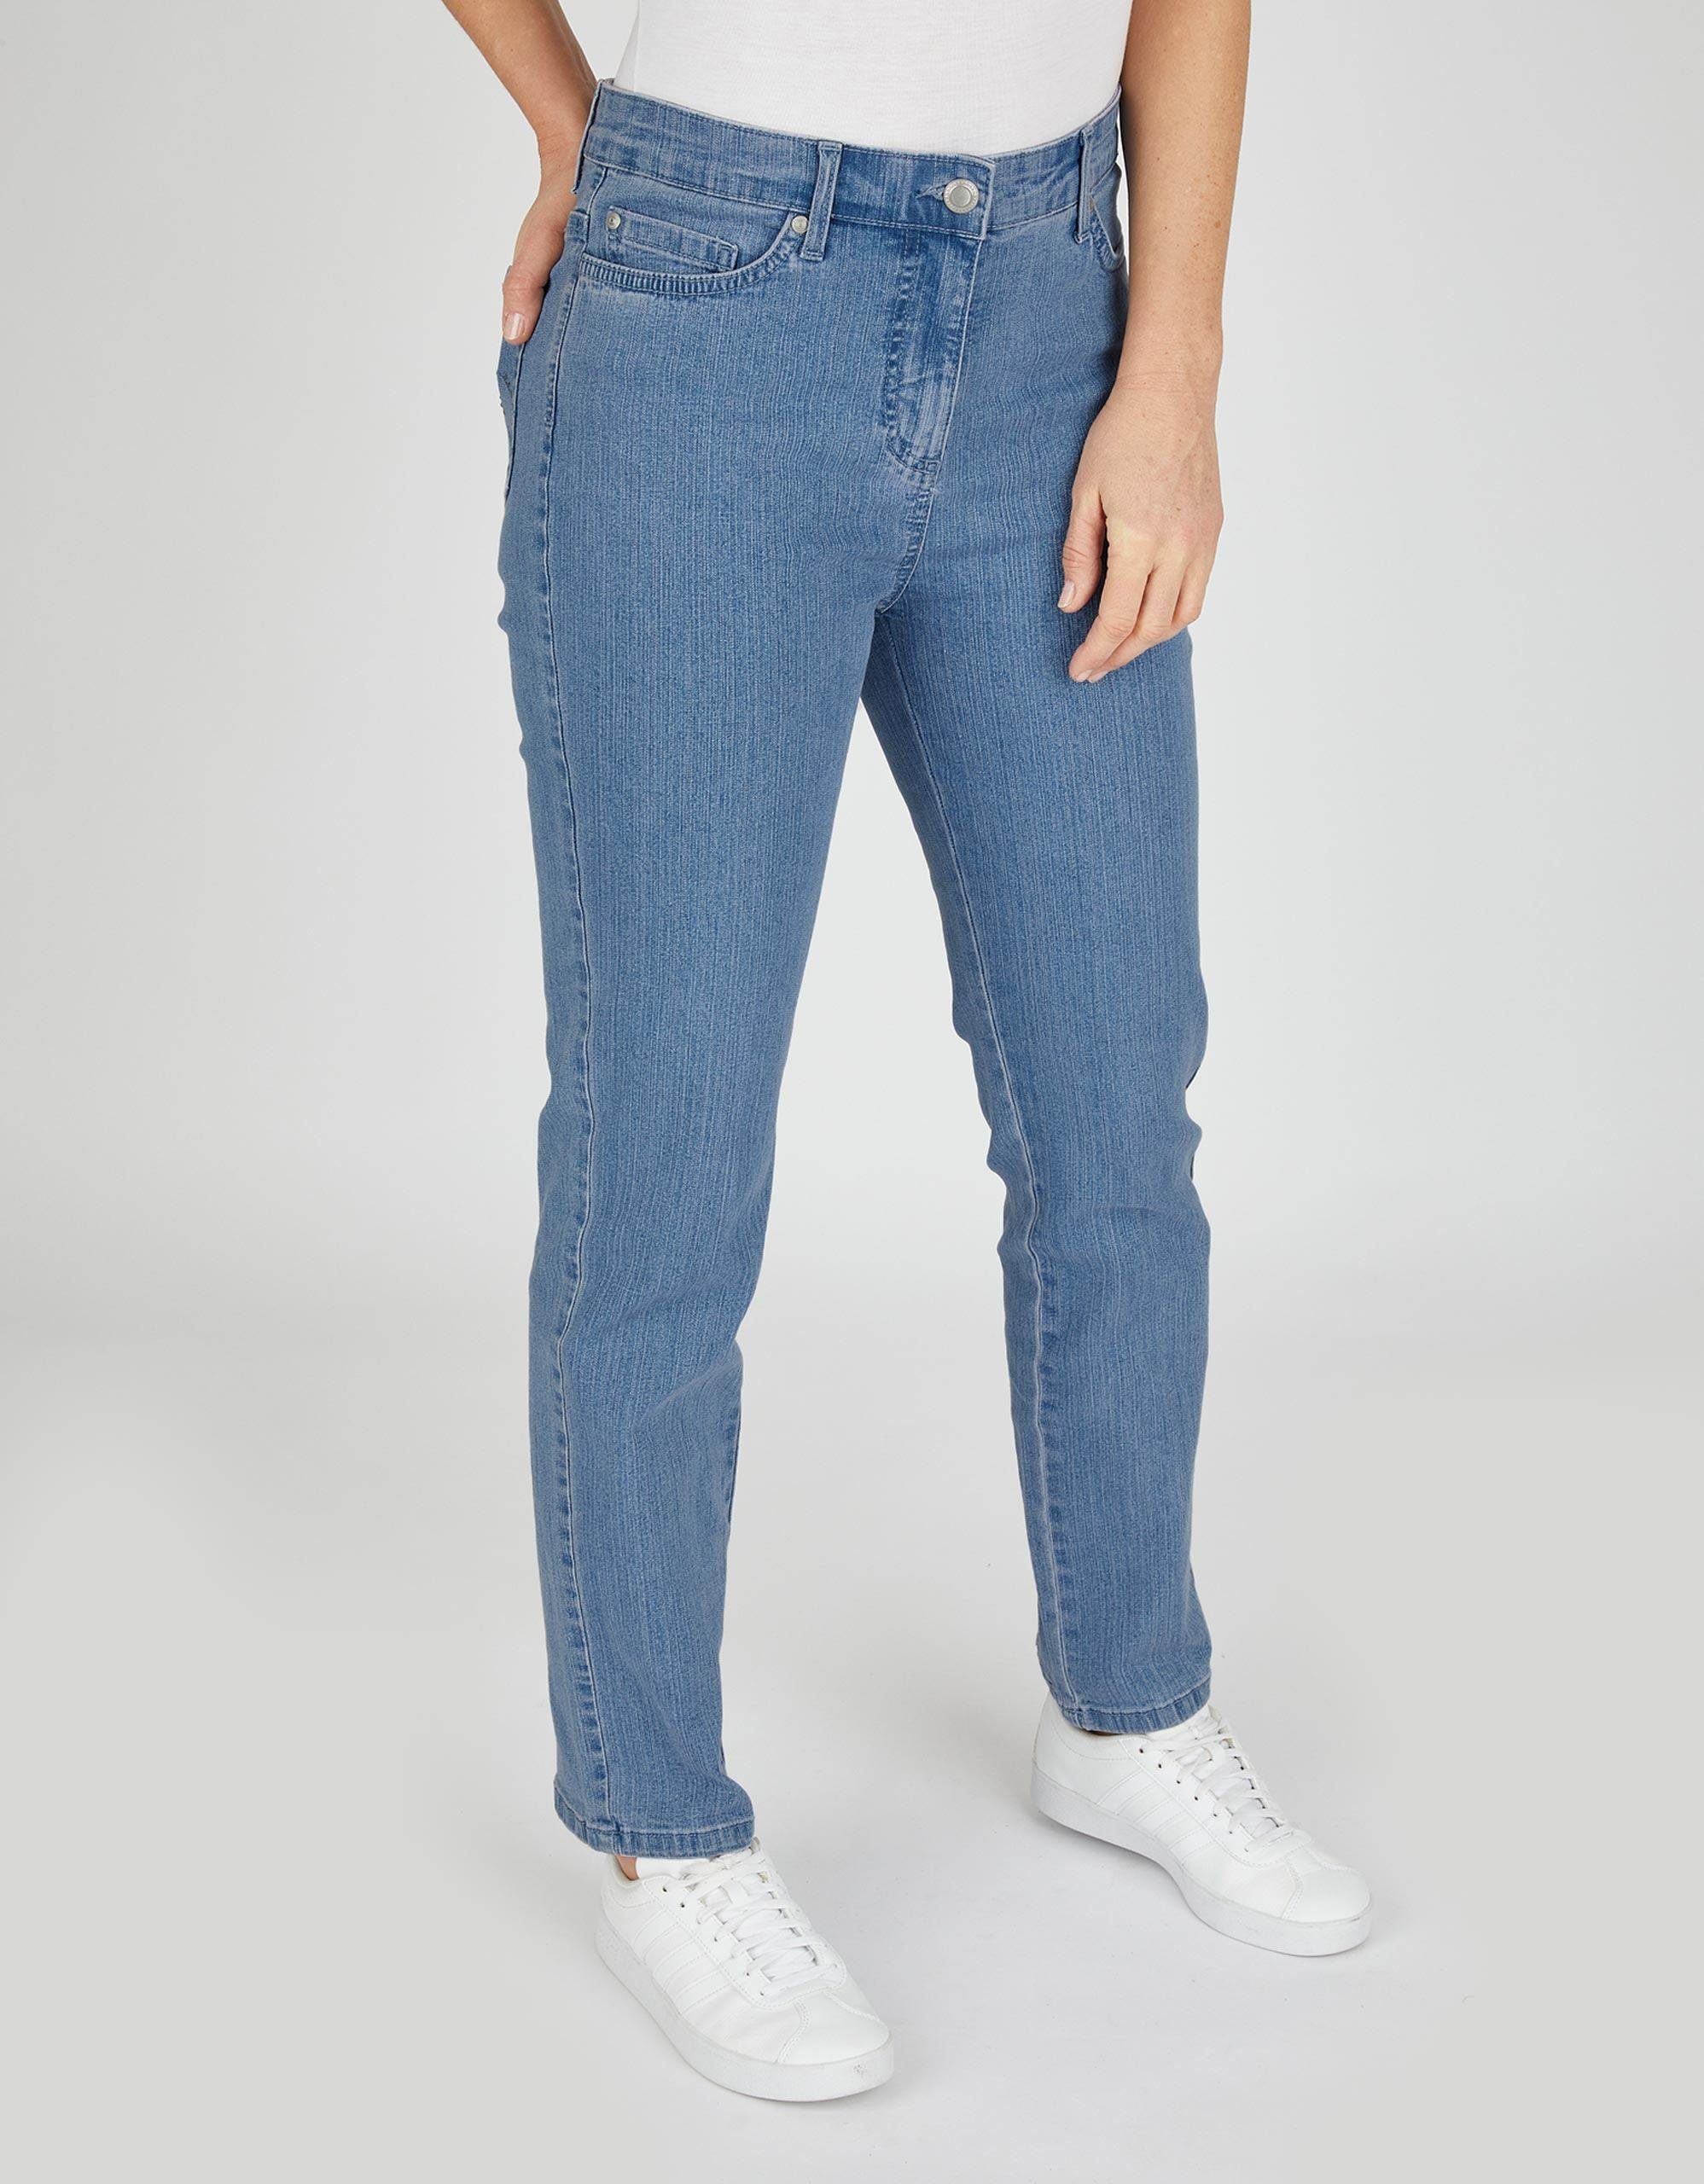 Bexleys woman by Adler Stretch-Jeans online kaufen | OTTO